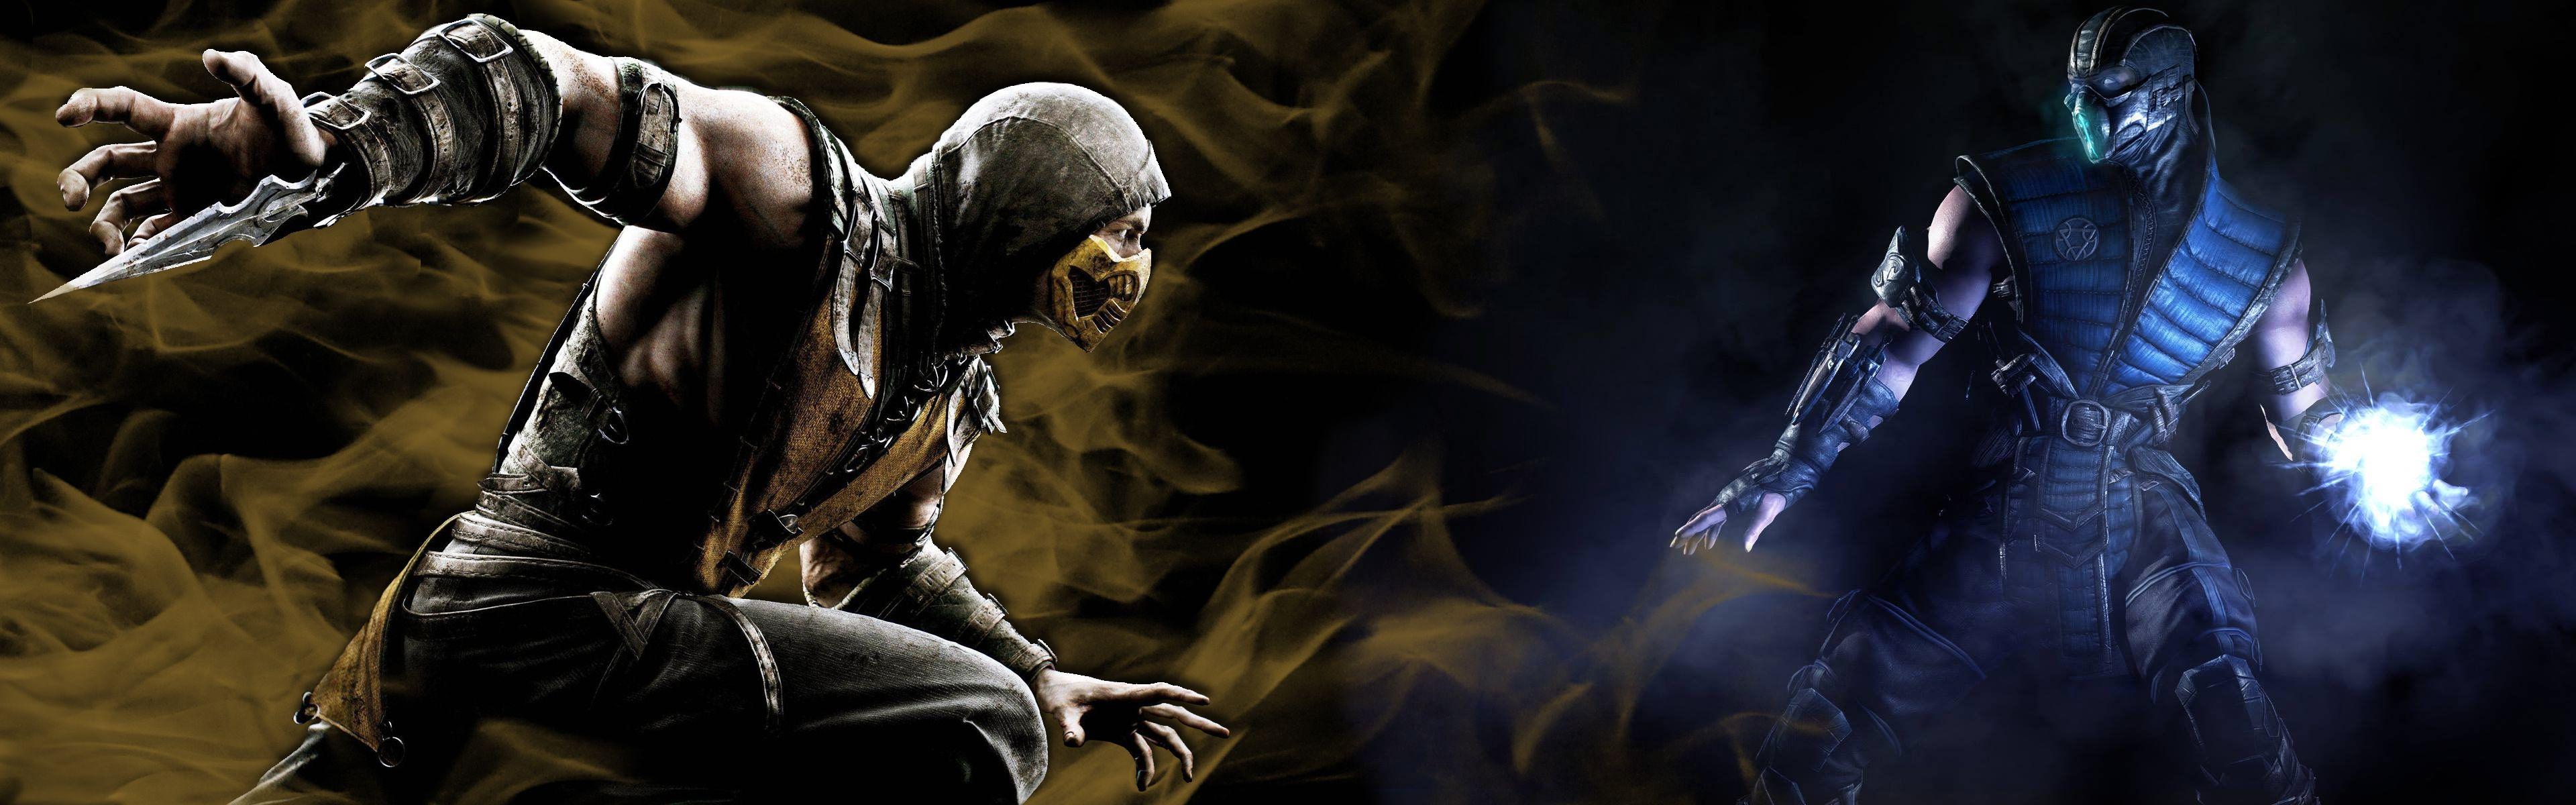 Mortal Kombat Scorpion Vs Sub Zero Wallpapers Top Free Mortal